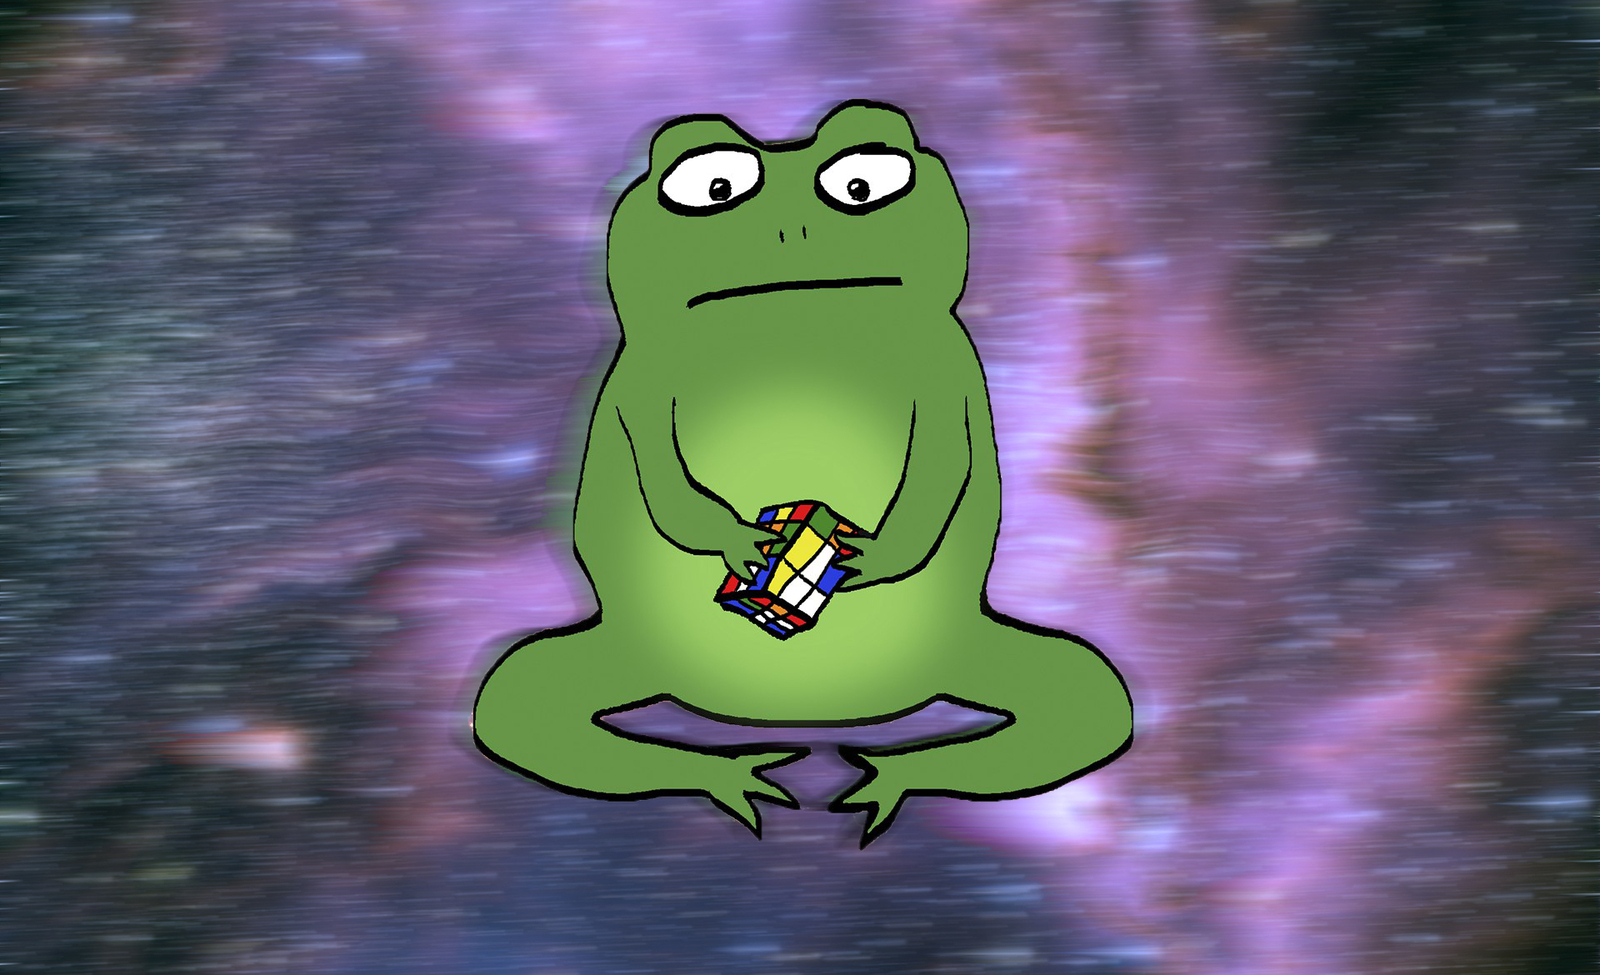 Frog traveler - My, Frogs, Rubik's Cube, Space, Serenity